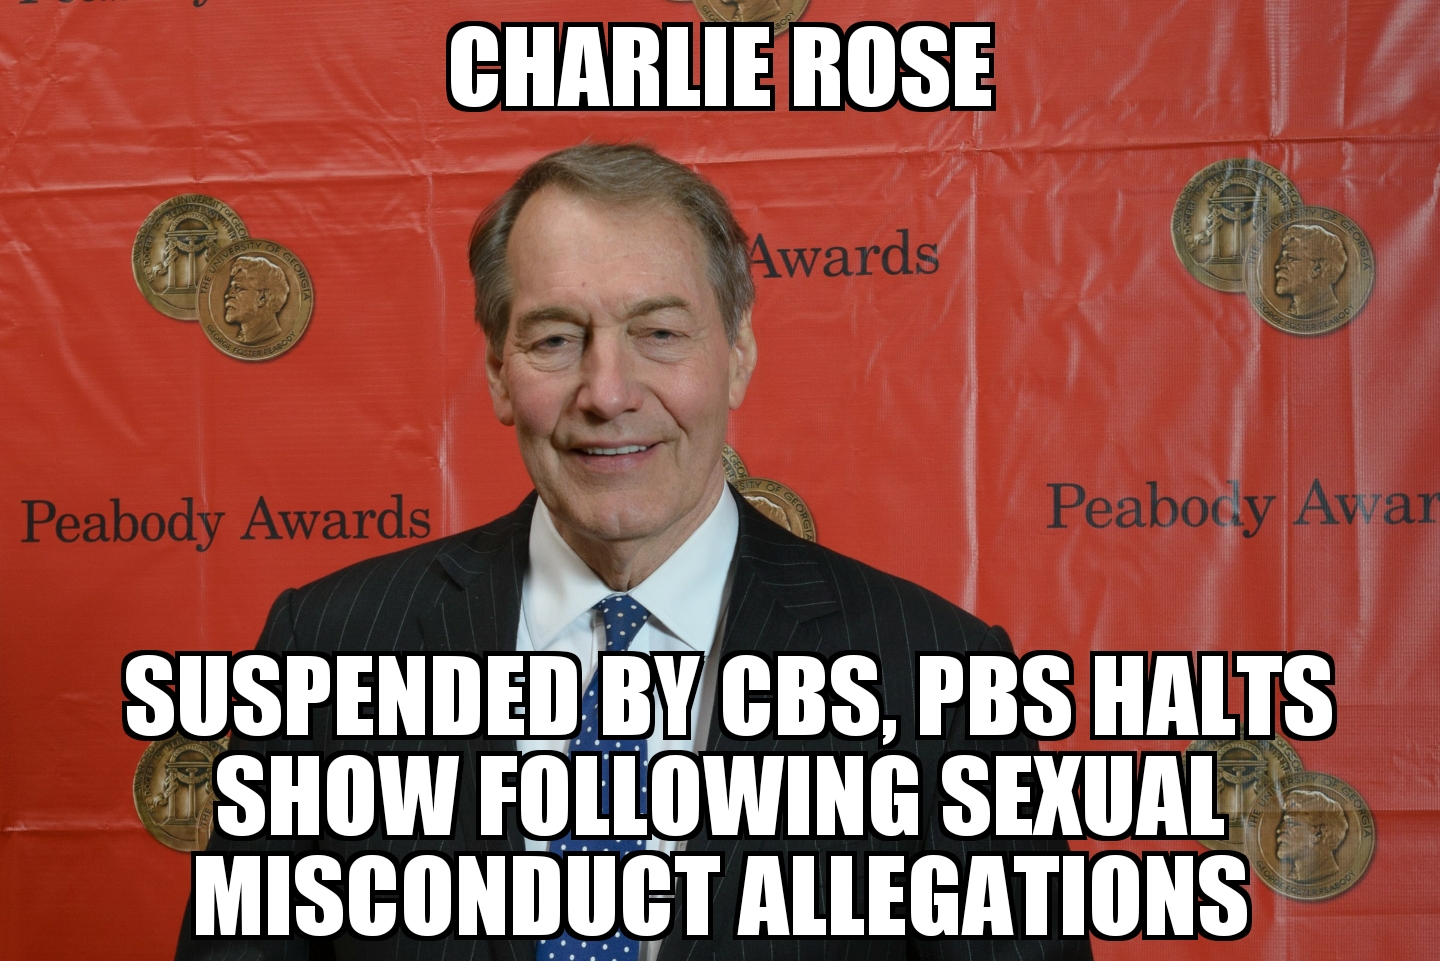 Charlie Rose suspended